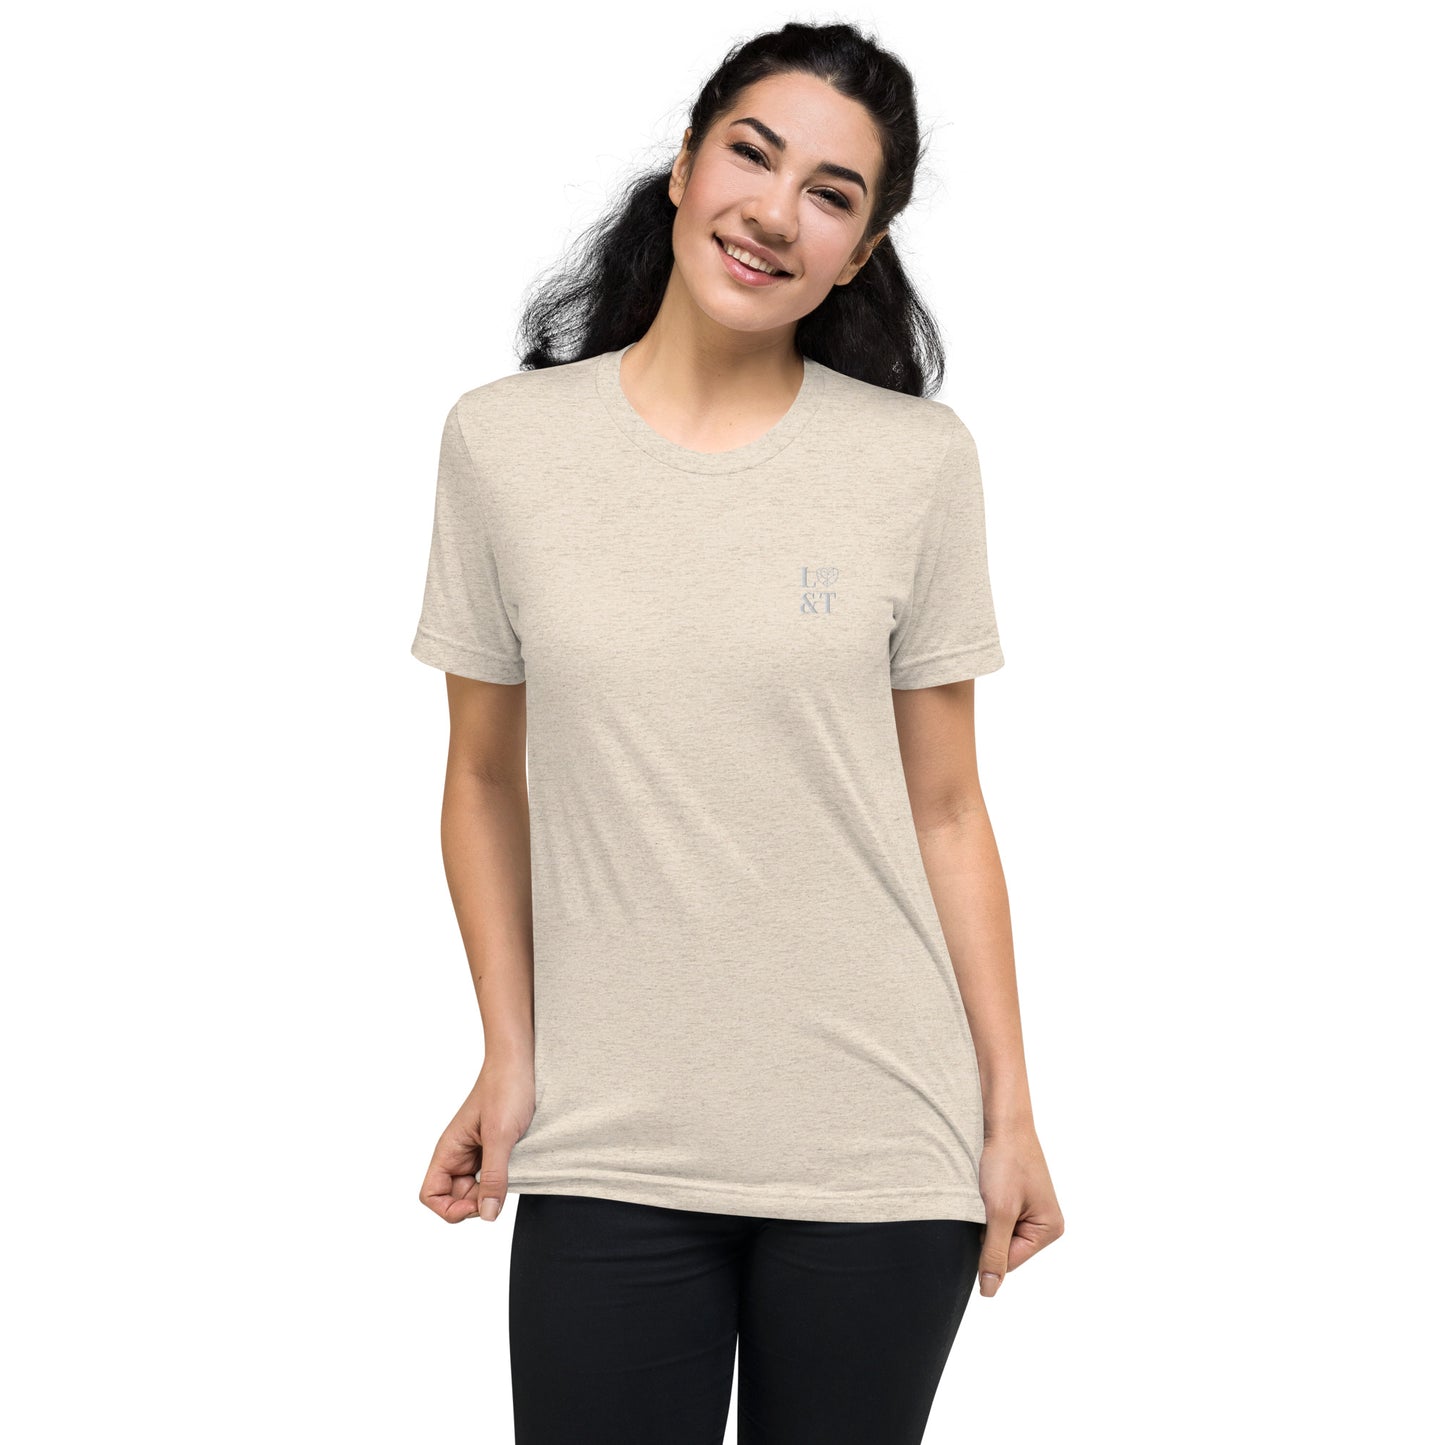 L&T Short Sleeve Tri-blend Embroidered Logo T-Shirt